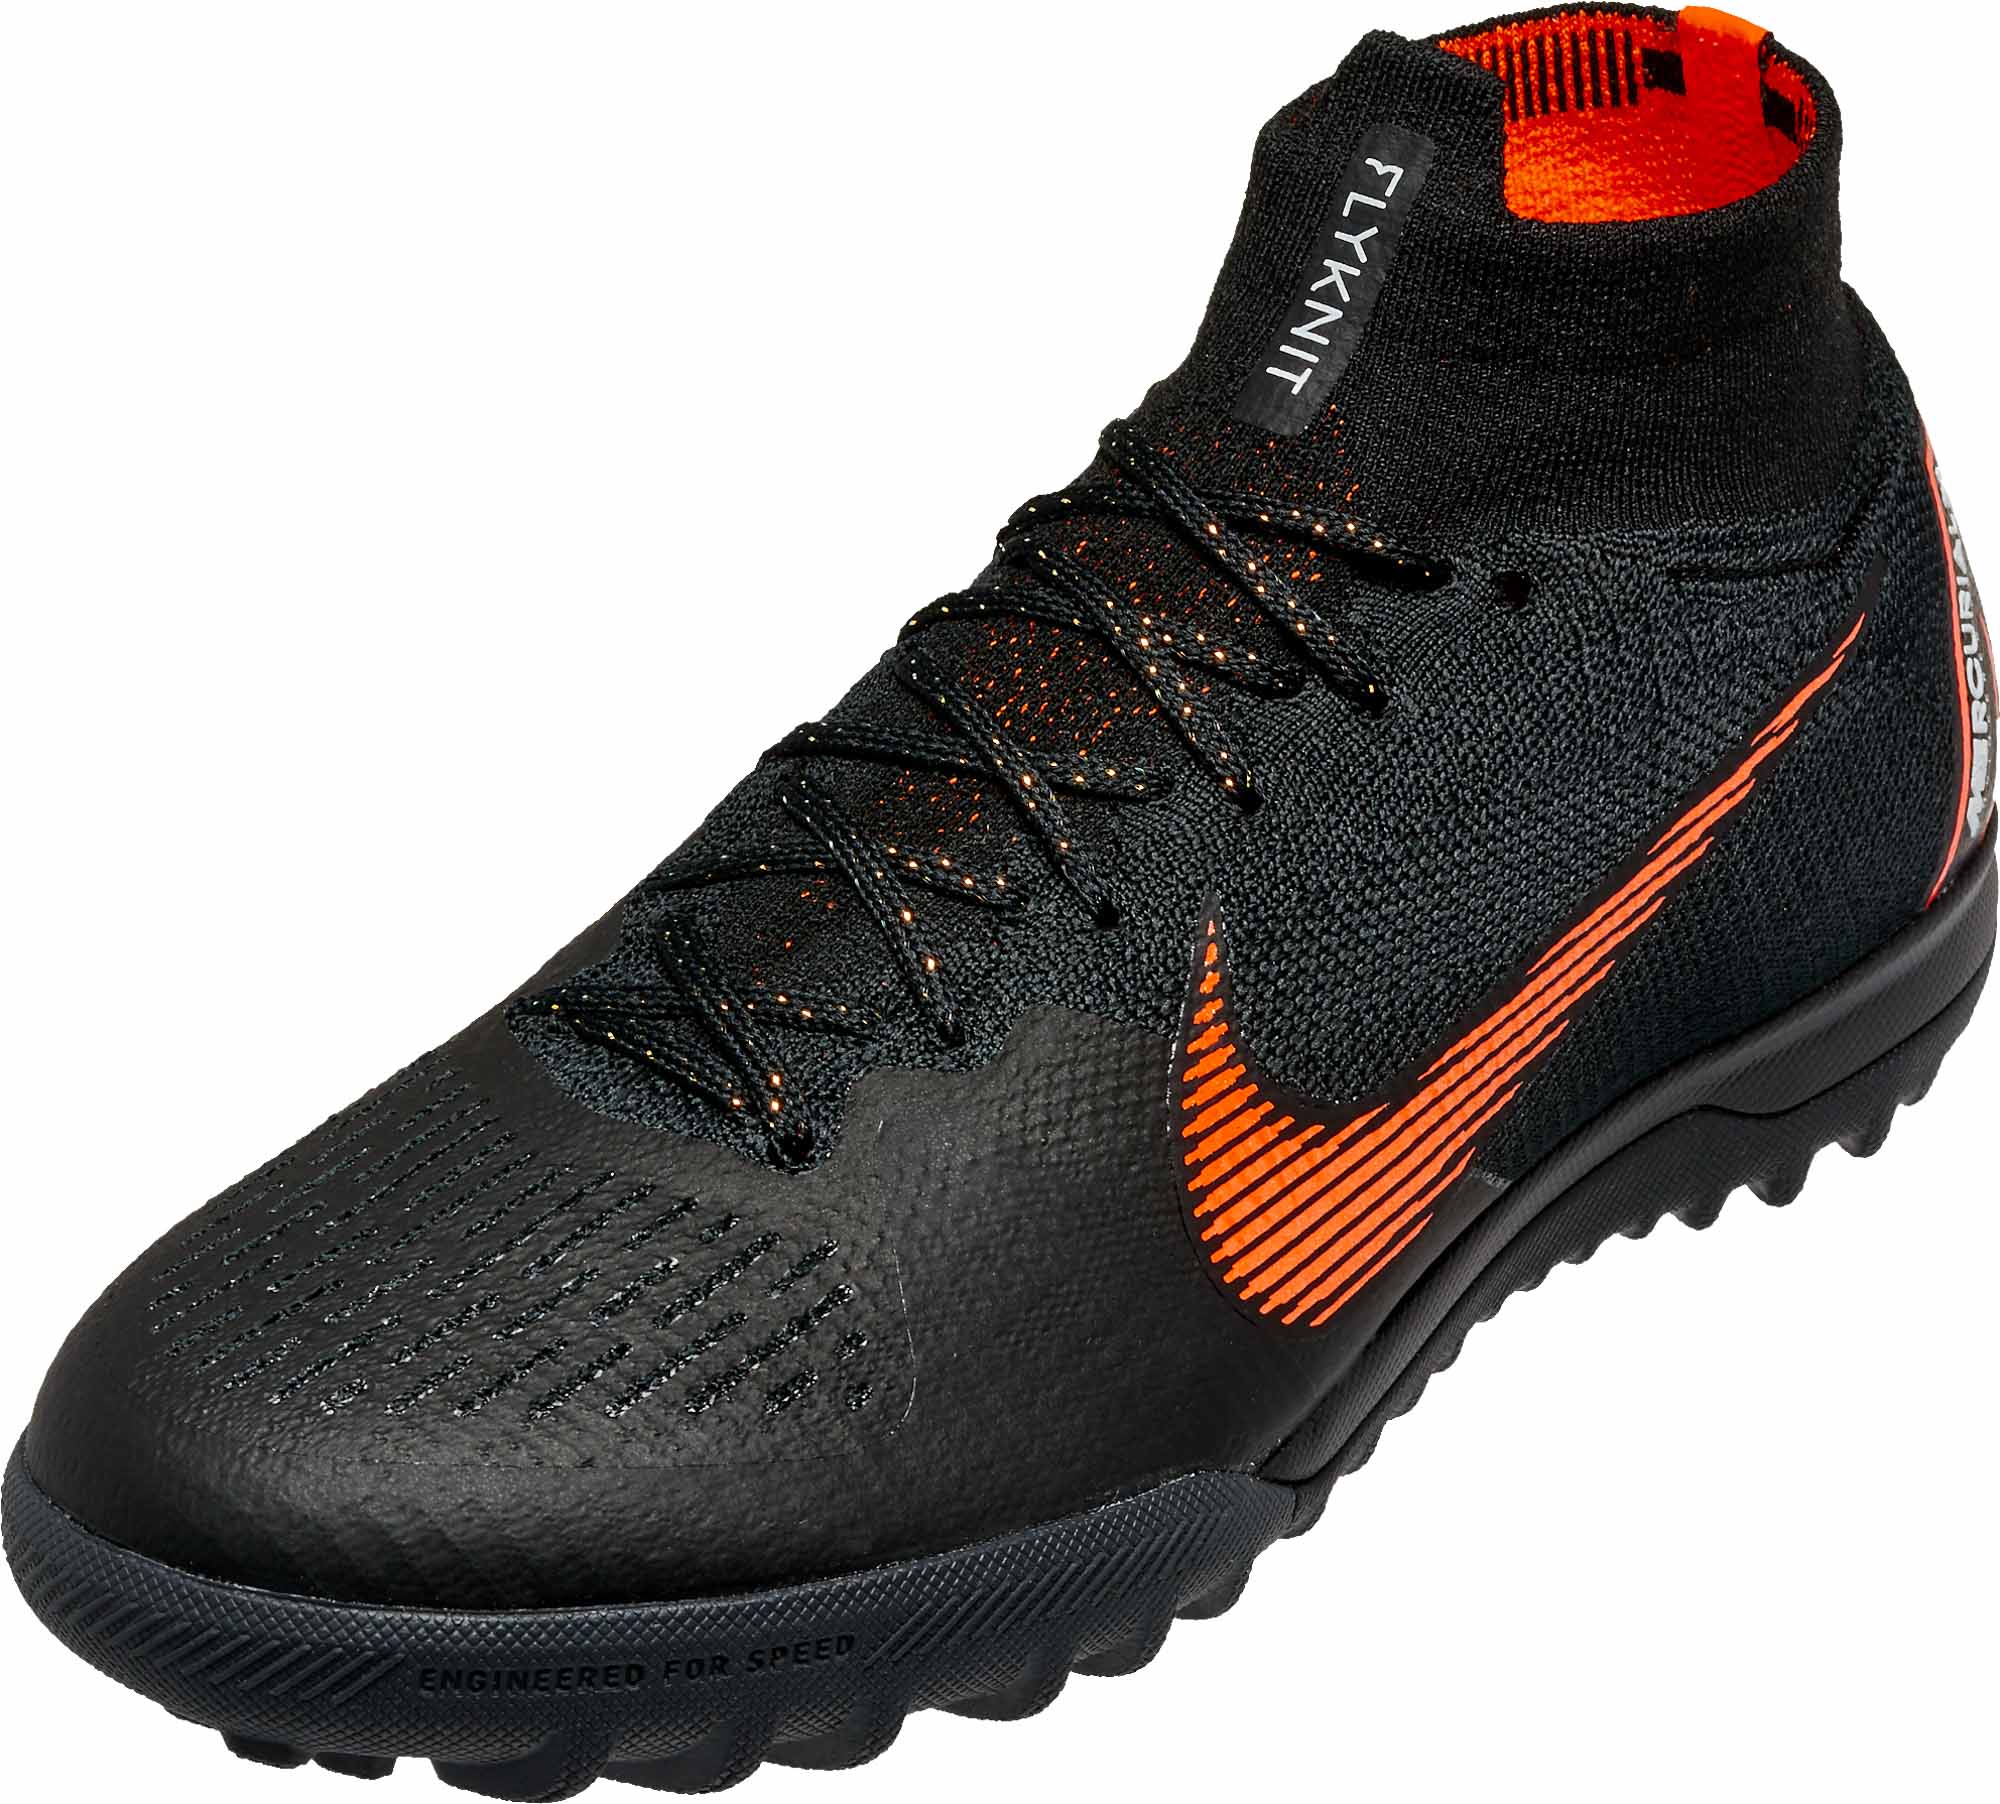 Nike SuperflyX 6 Elite TF - Black \u0026 Total Orange